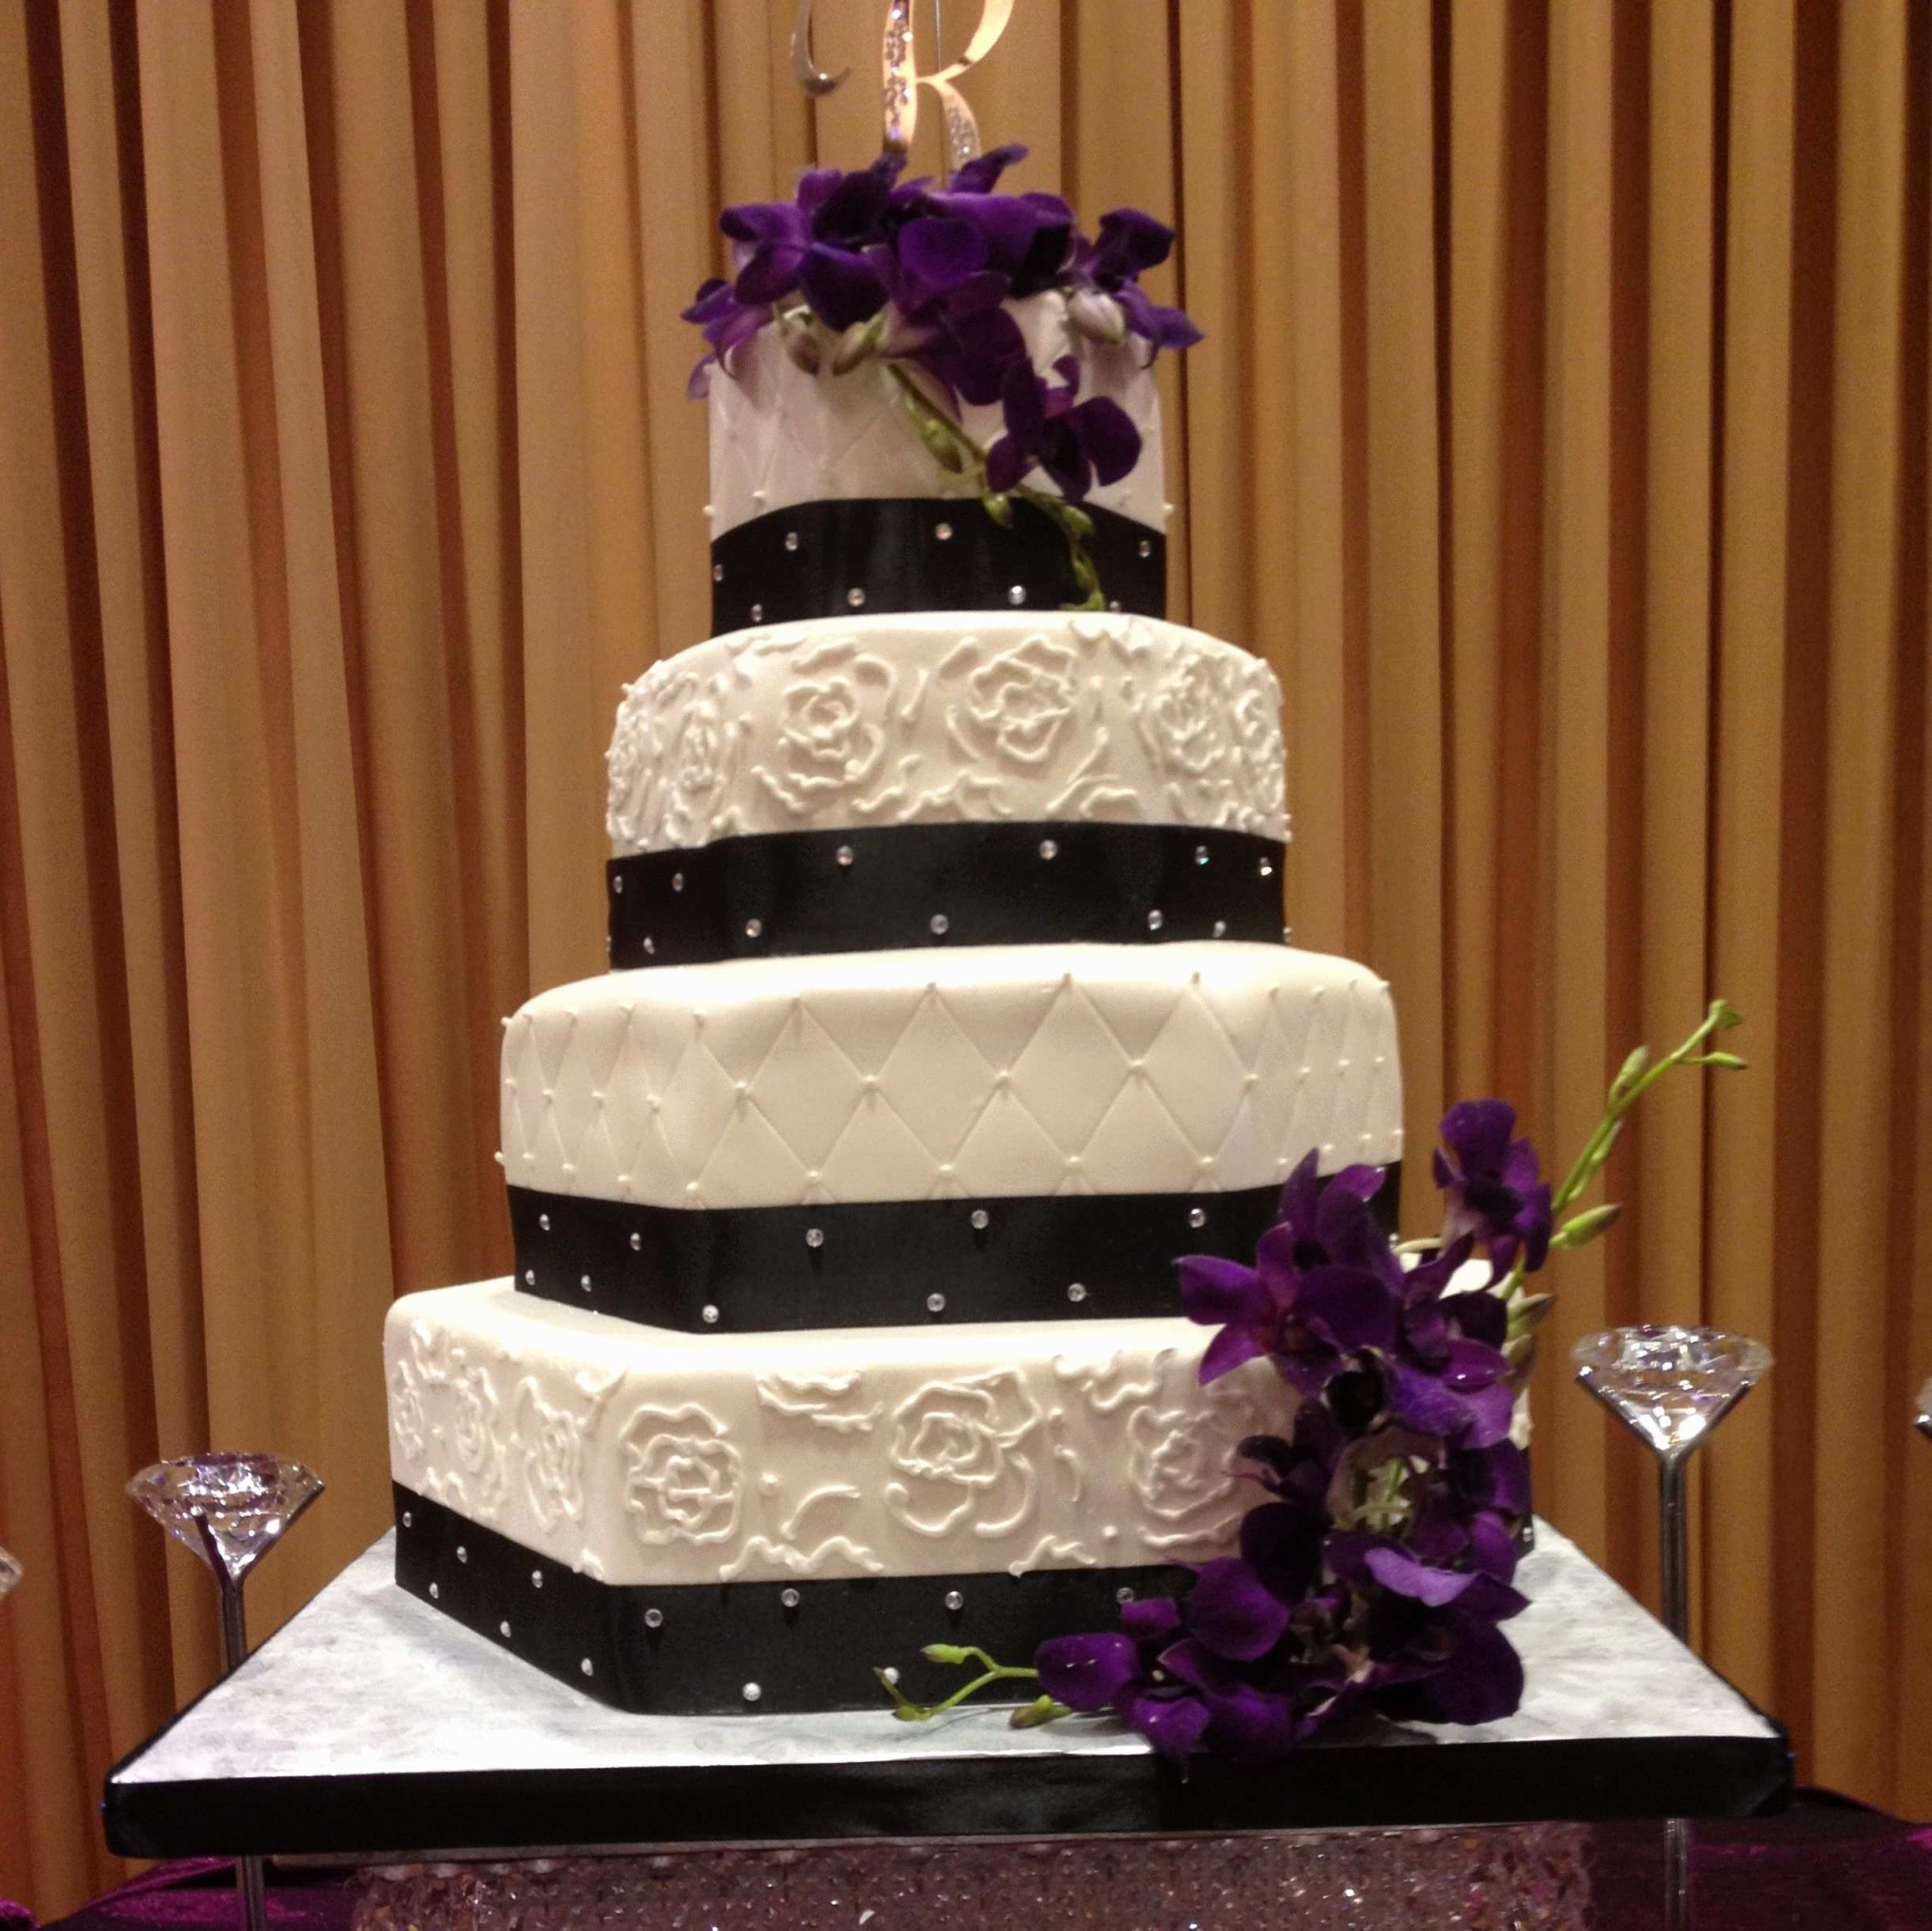 Wedding Cakes Colorado Springs
 49 Premium King soopers Wedding Cakes Ro E s